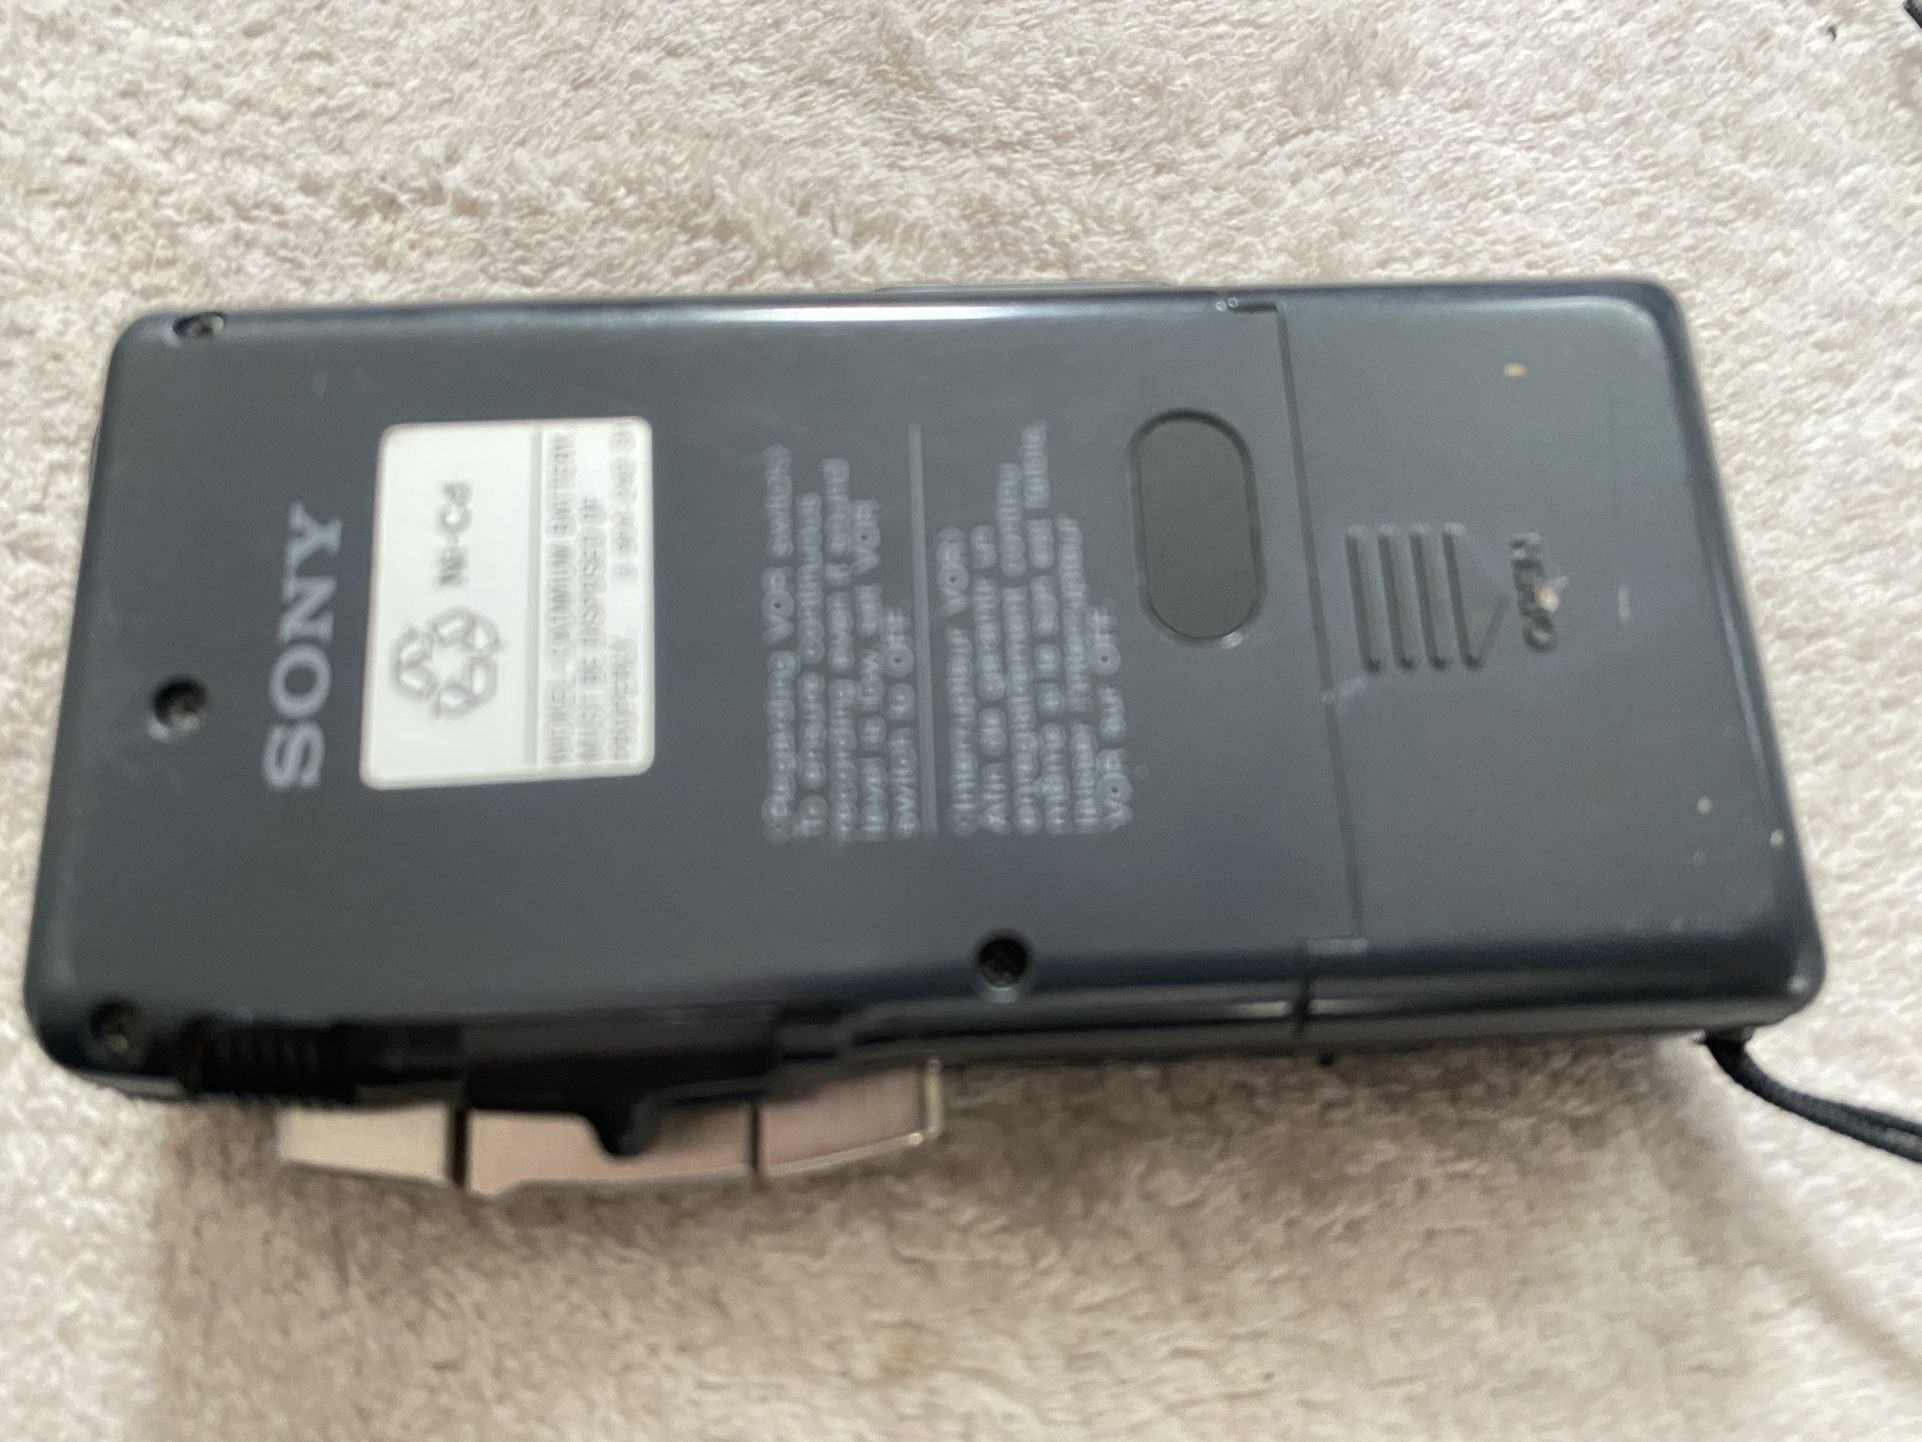 Sony Reel To Reel Player Model 521 for Sale in Elk Grove, CA - OfferUp